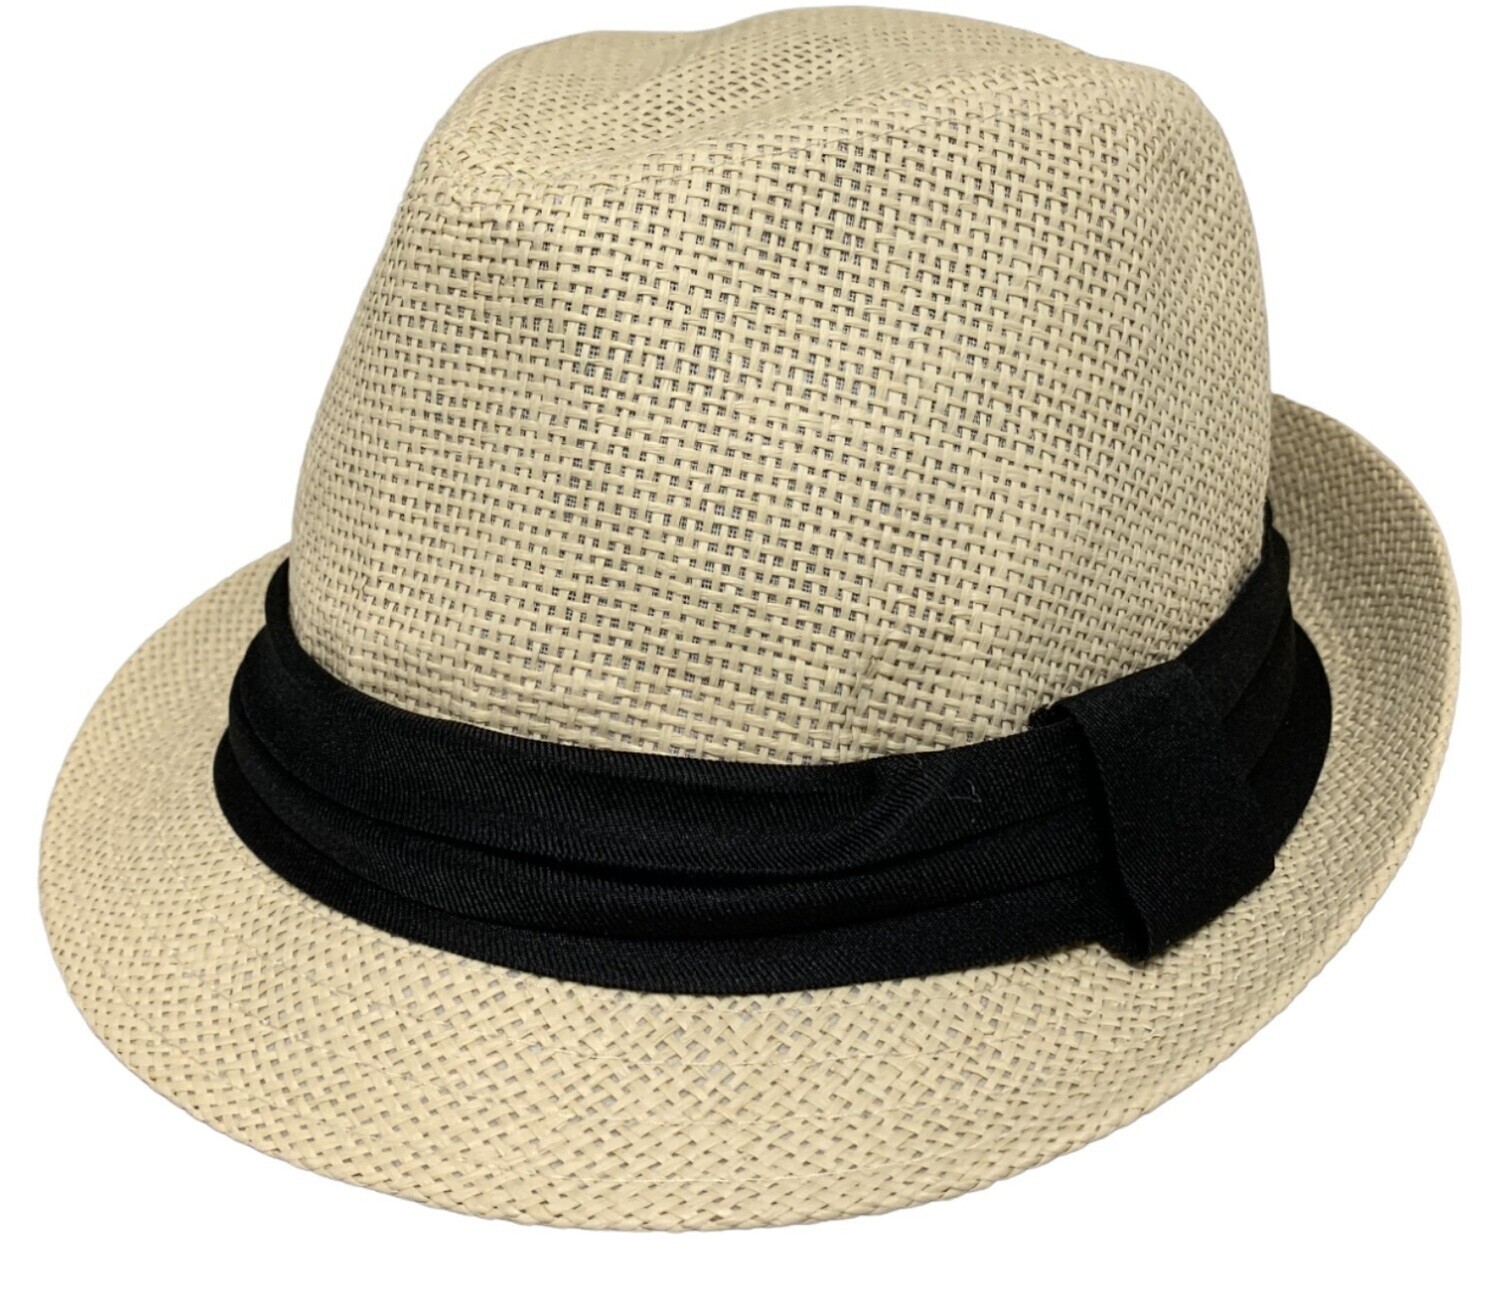 Premium Straw and Summer Fancy Fedora Sun Hat